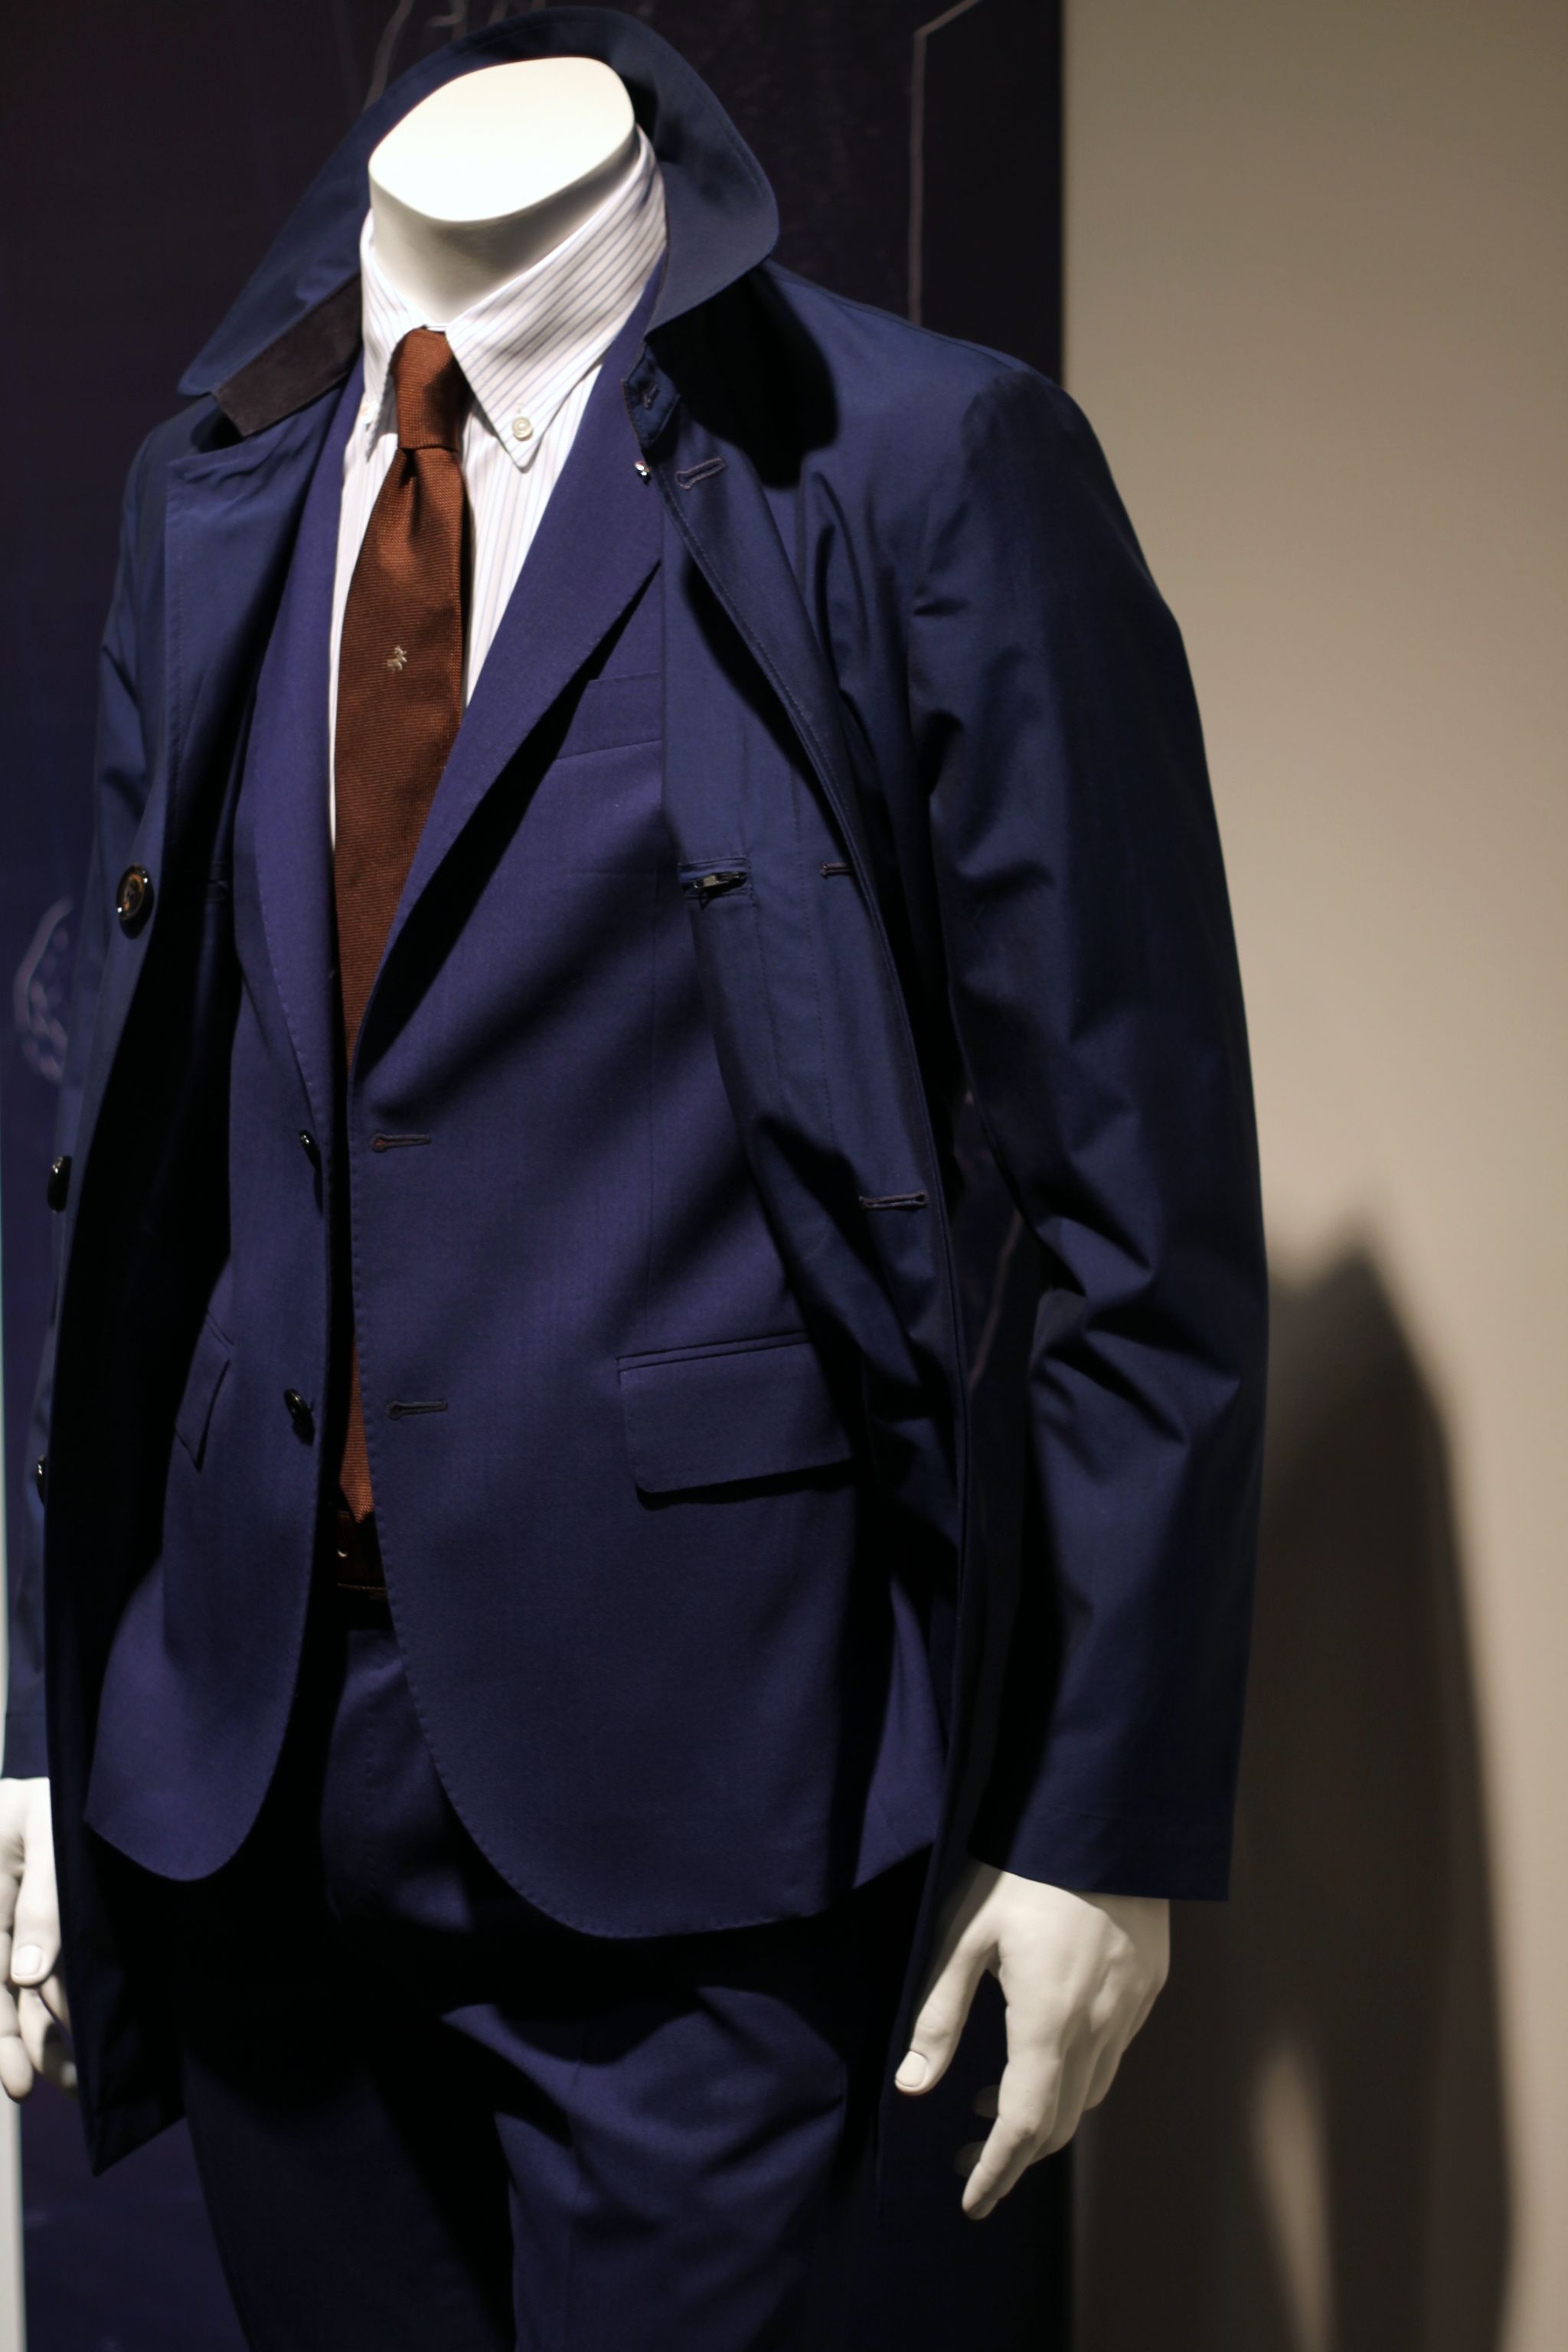 Pitti Uomo 90 Tombolini blue suit and overcoat